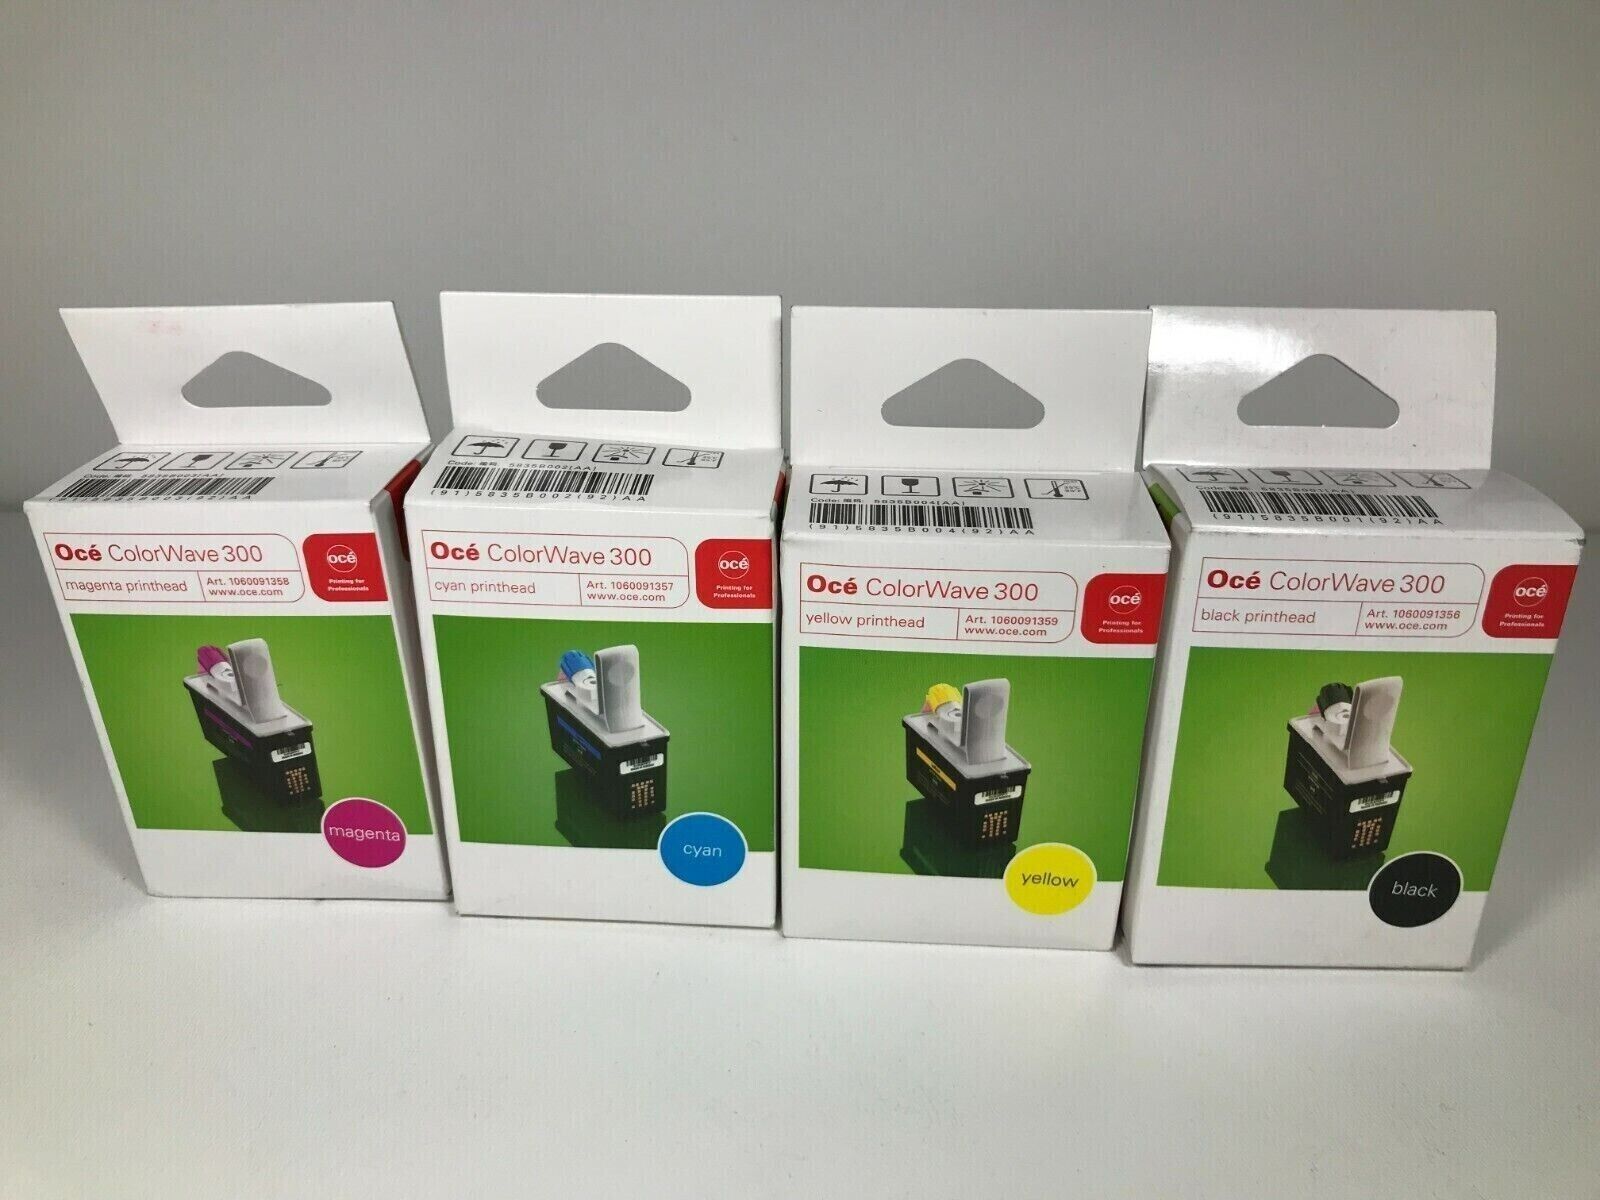 Oce colorwave 300 printheads | 1060091356/7/8/9 | 4 pack New Sealed Genuine Oce